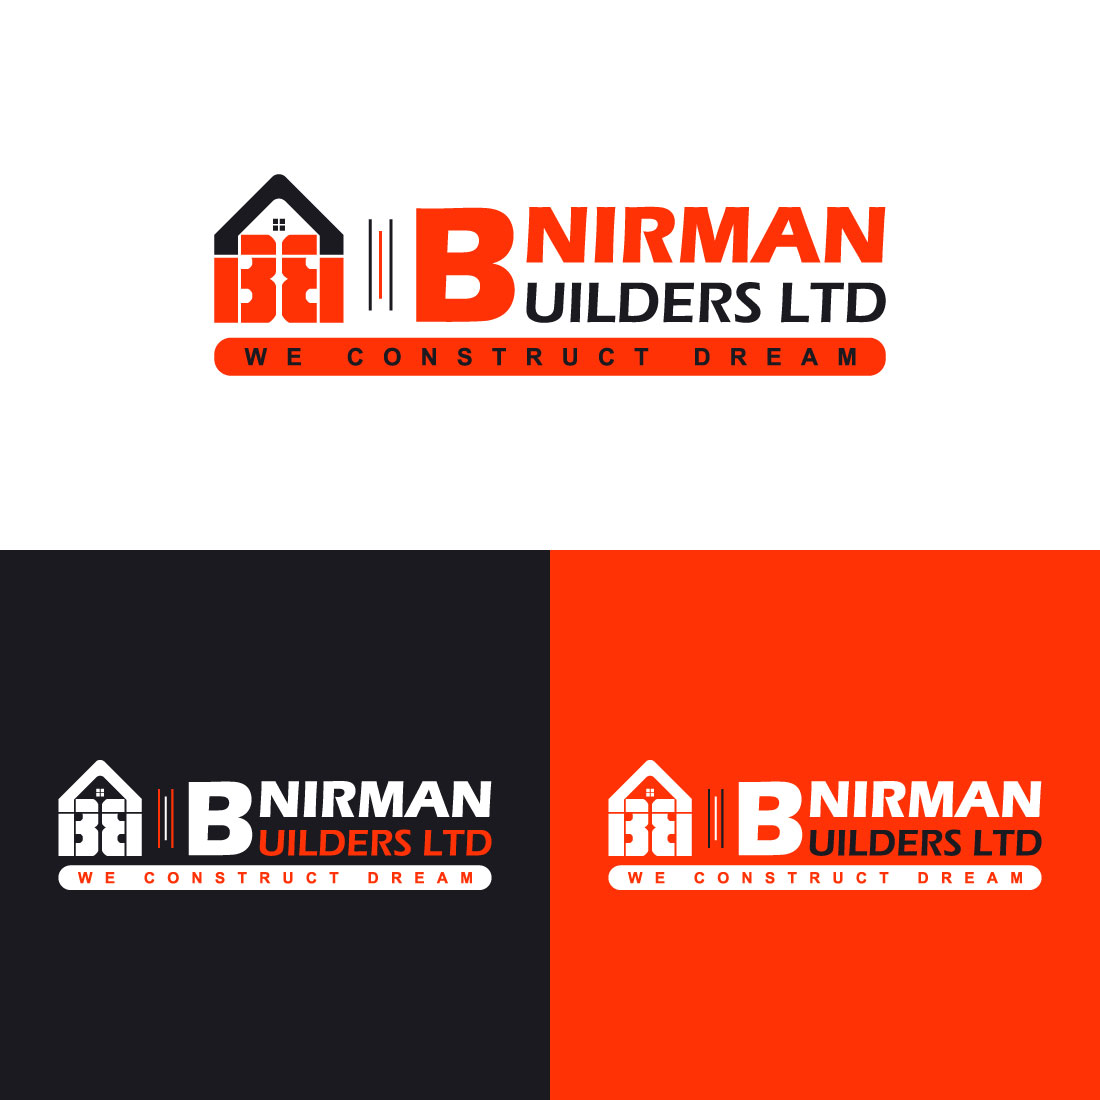 Bnirman Builders LTD Logo main image.